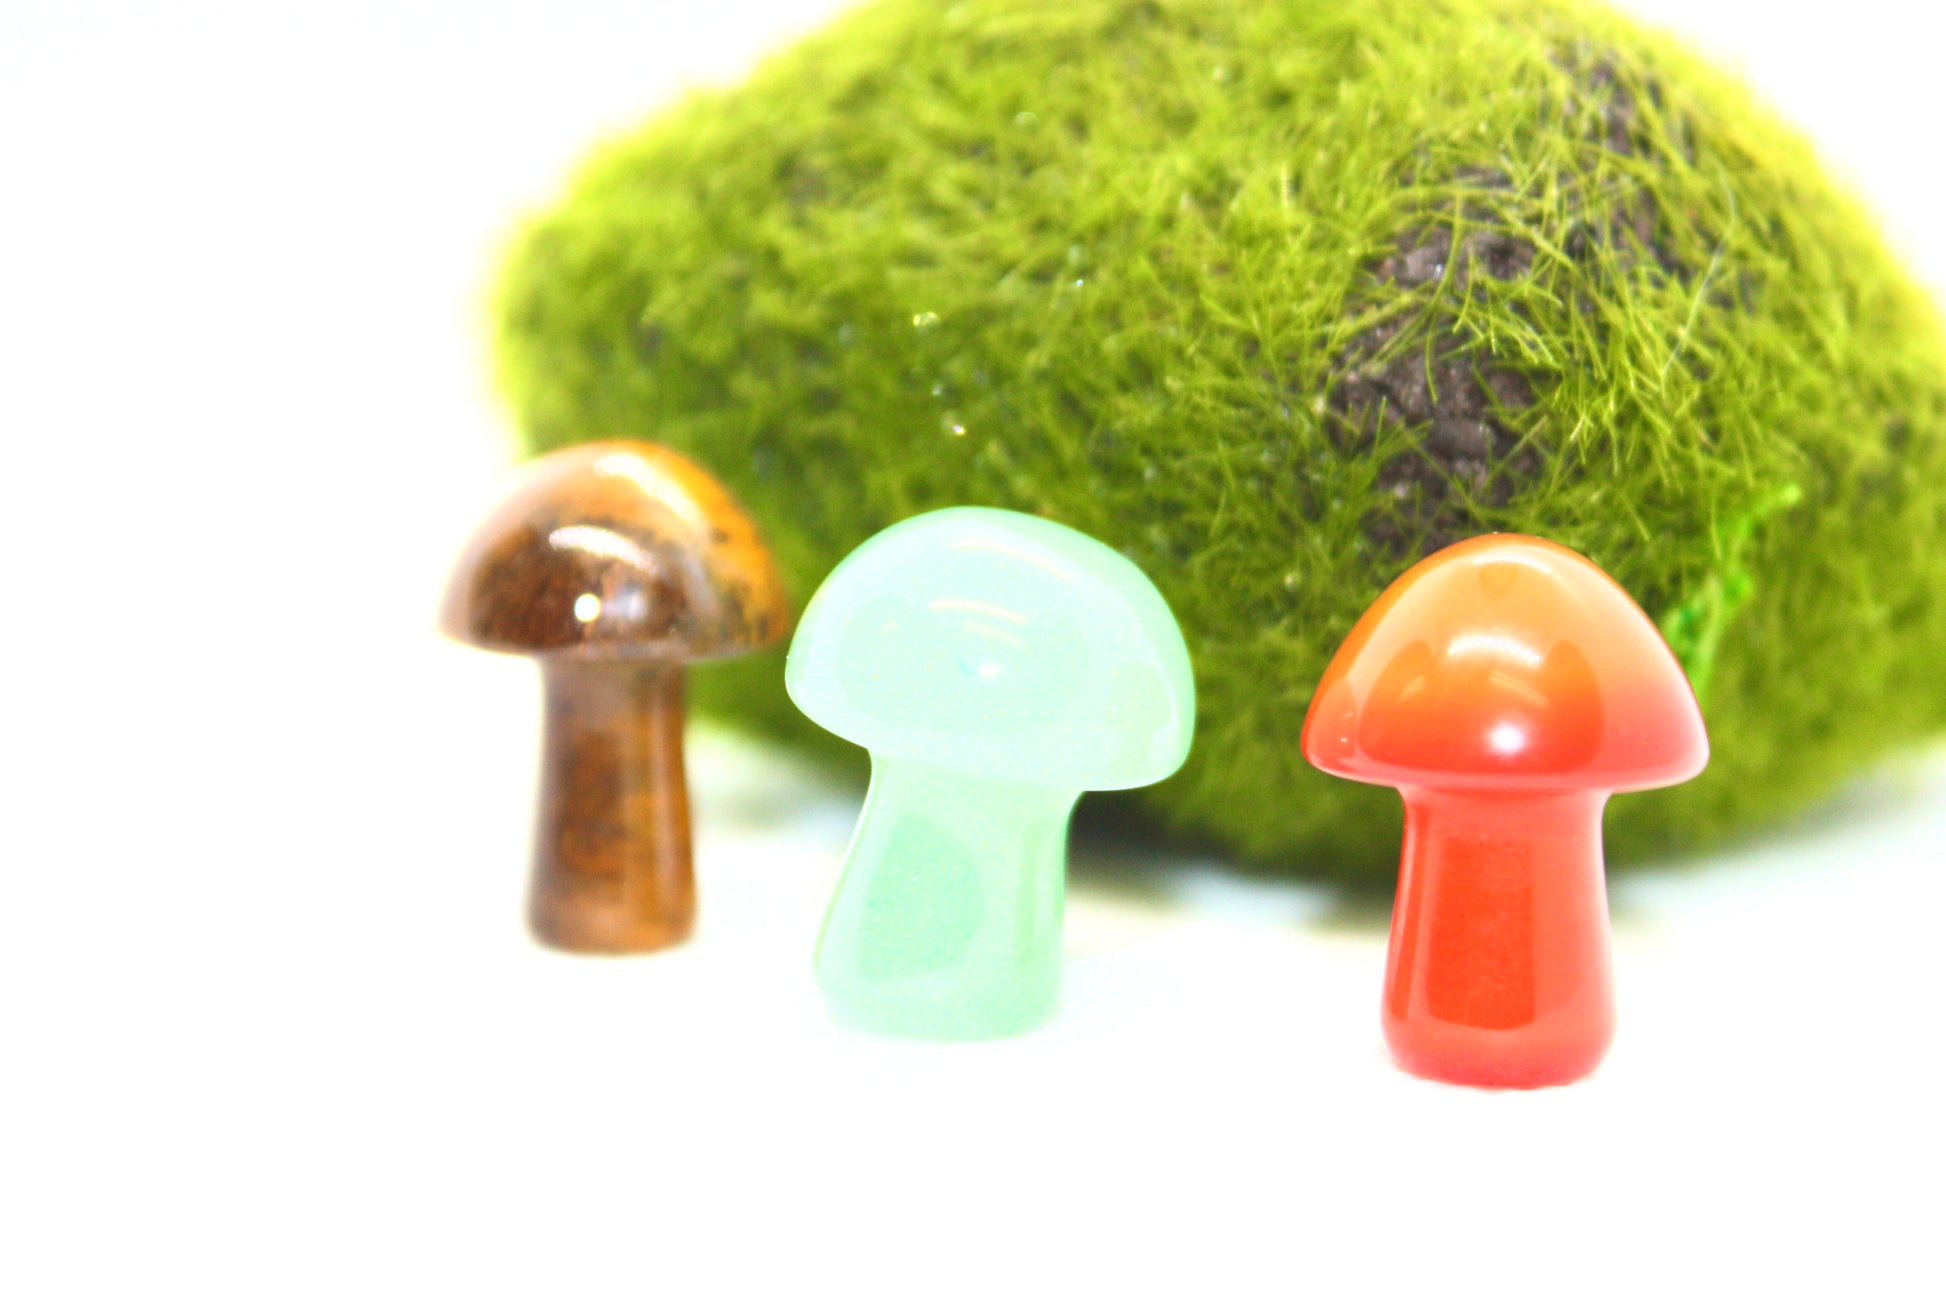 Green Aventurine, Tigers Eye and Red Agate Mini Mushroom Trio Stones kraftymother.com